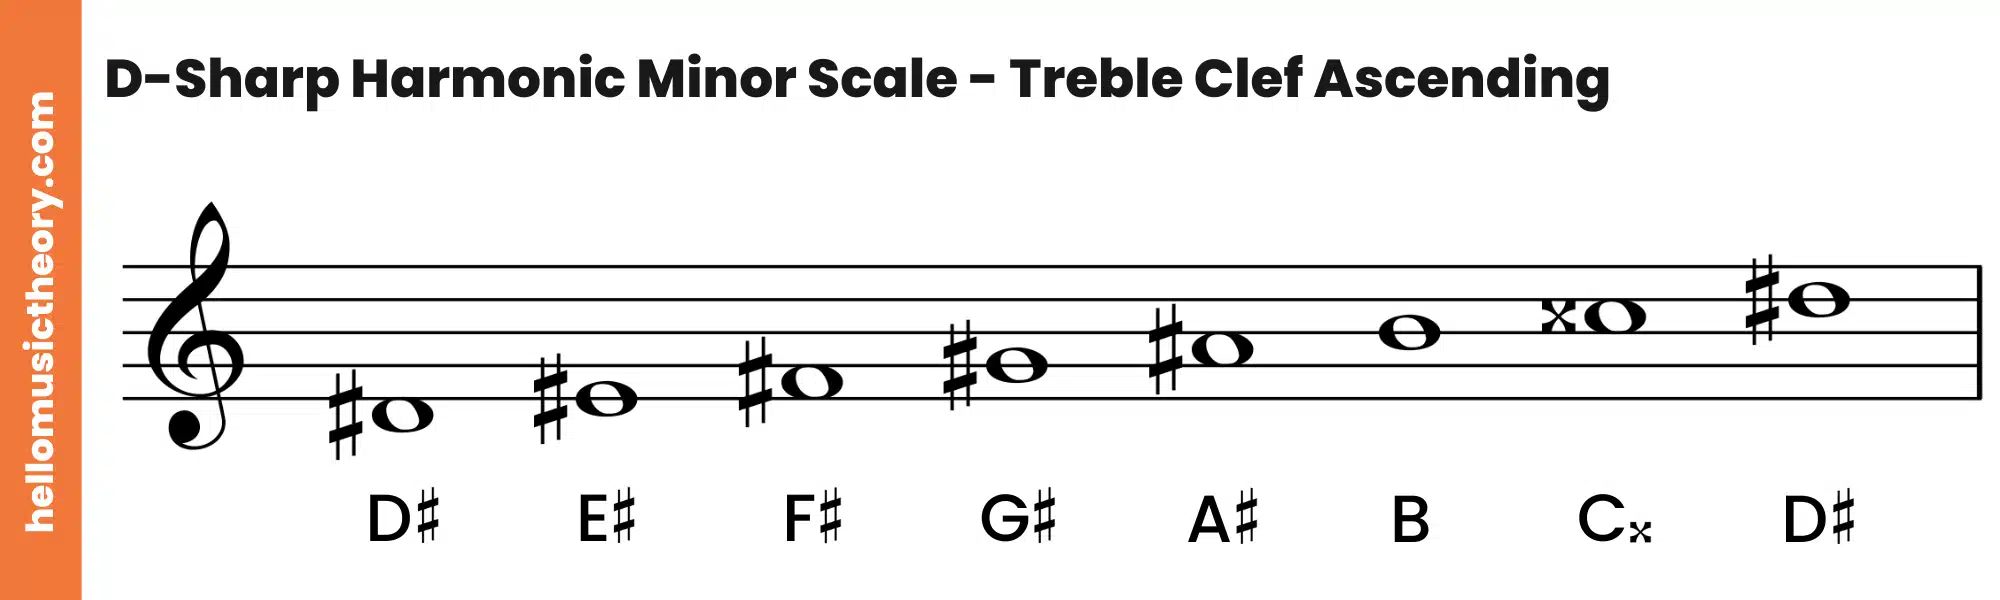 D-Sharp Harmonic Minor Scale Treble Clef Ascending